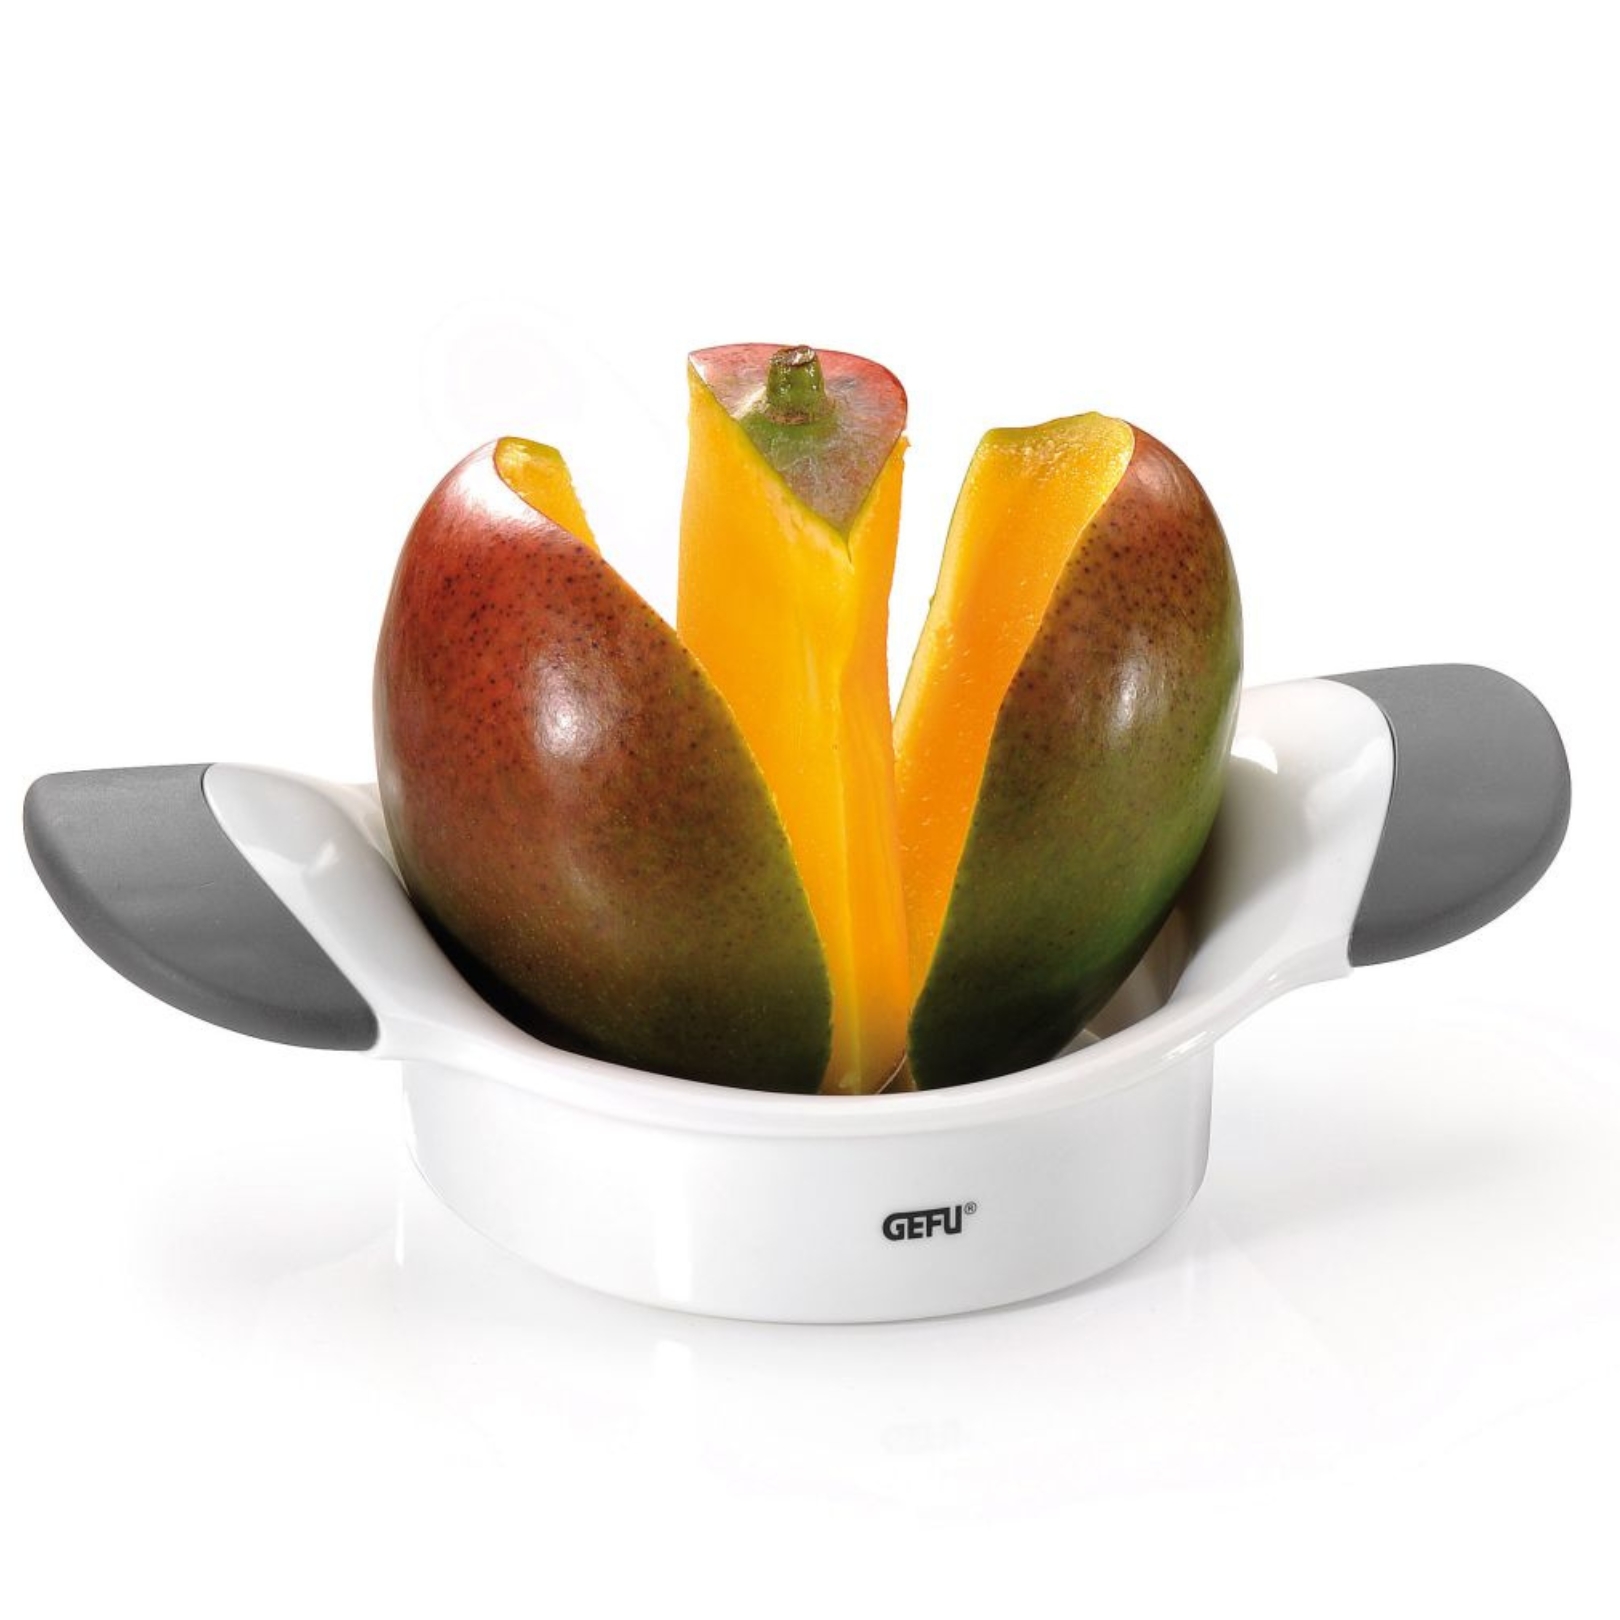 Buy Mango Splitter - Gefu Online NZ